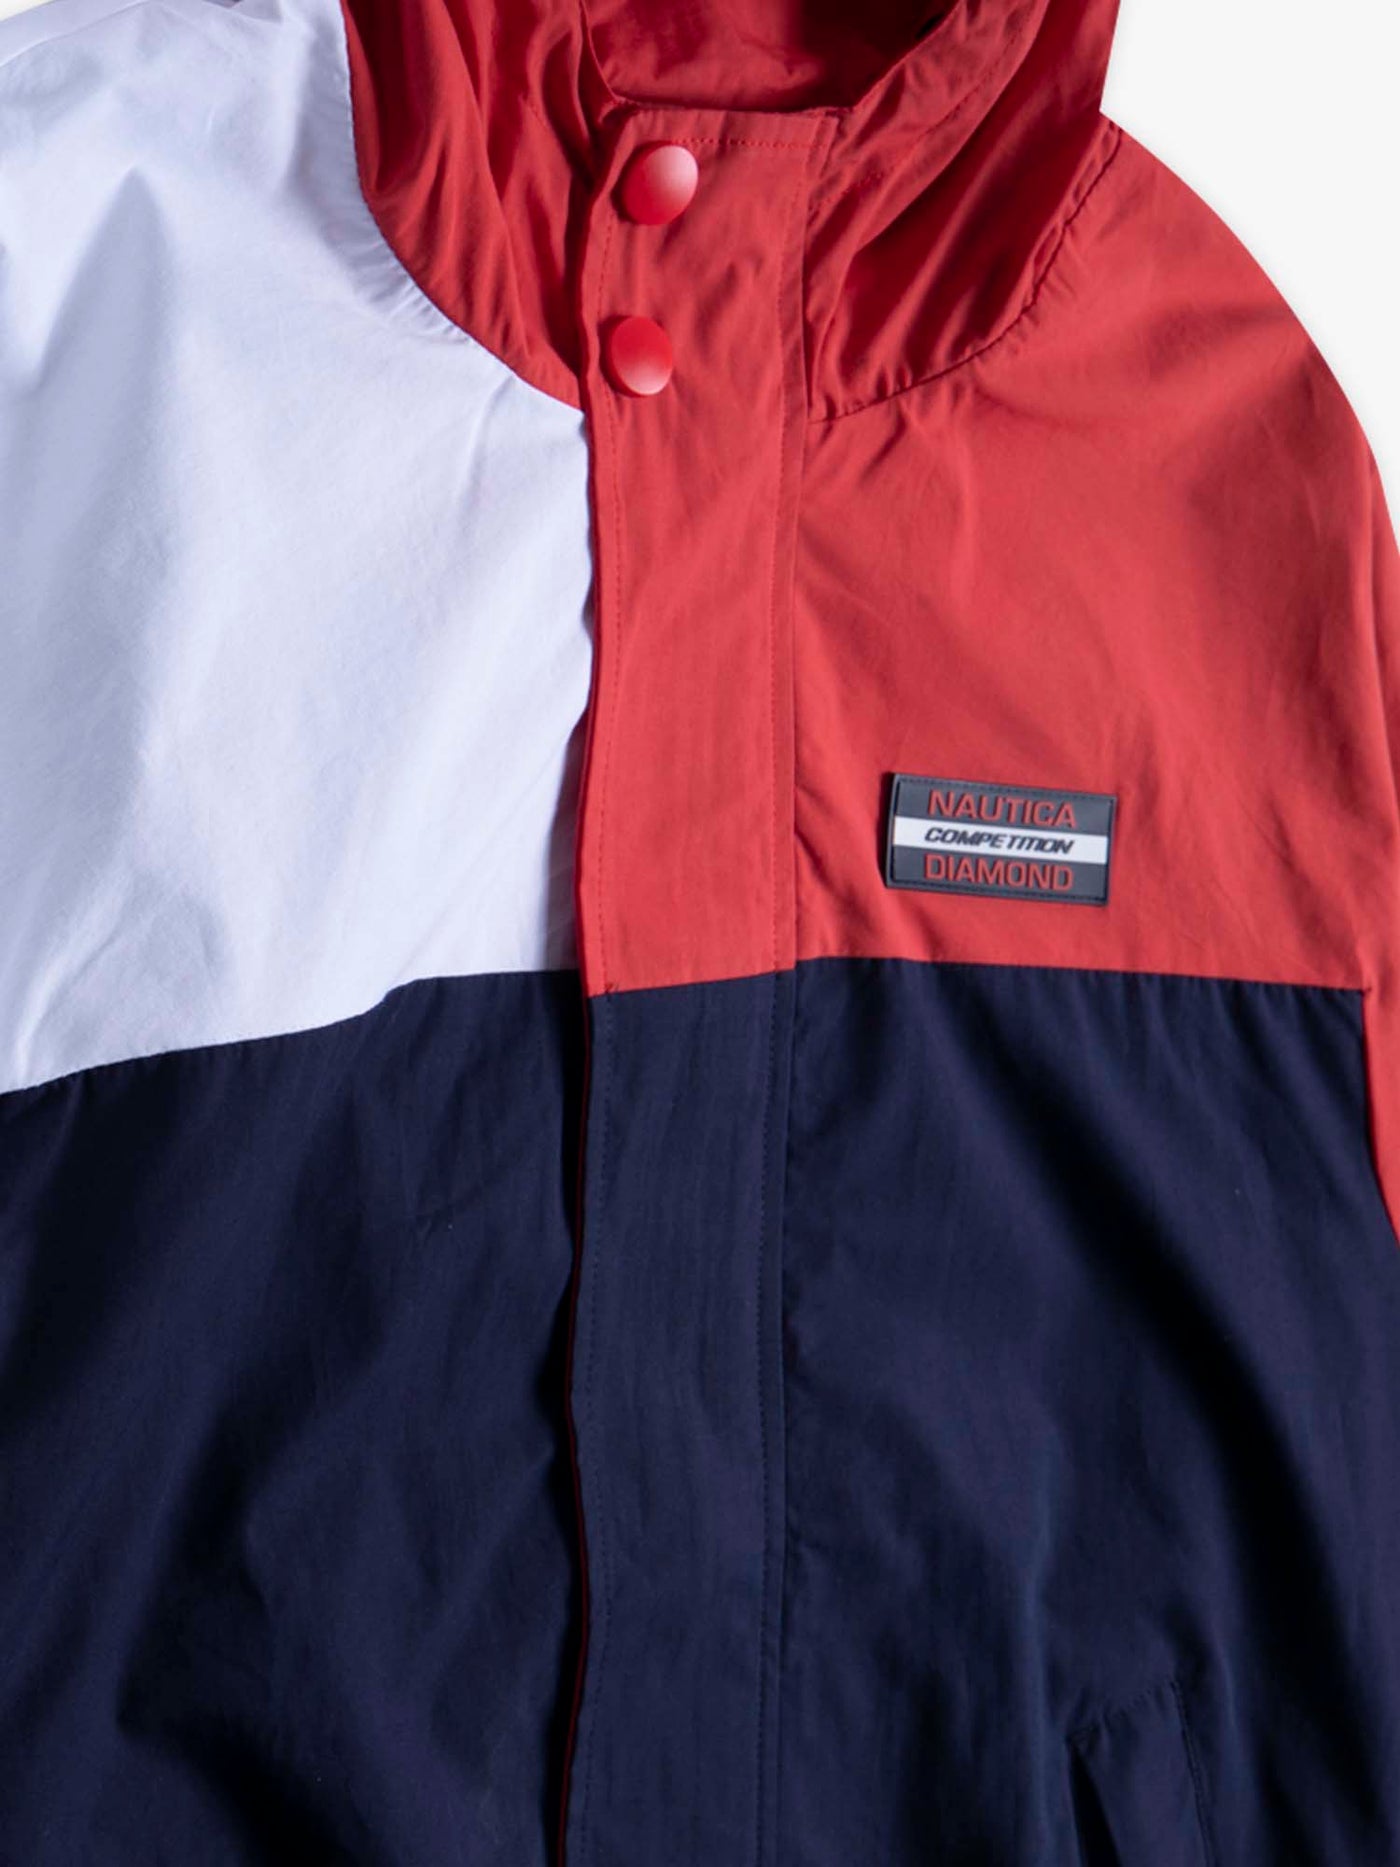 Nautica Nylon Color Block Jacket - Red / Navy